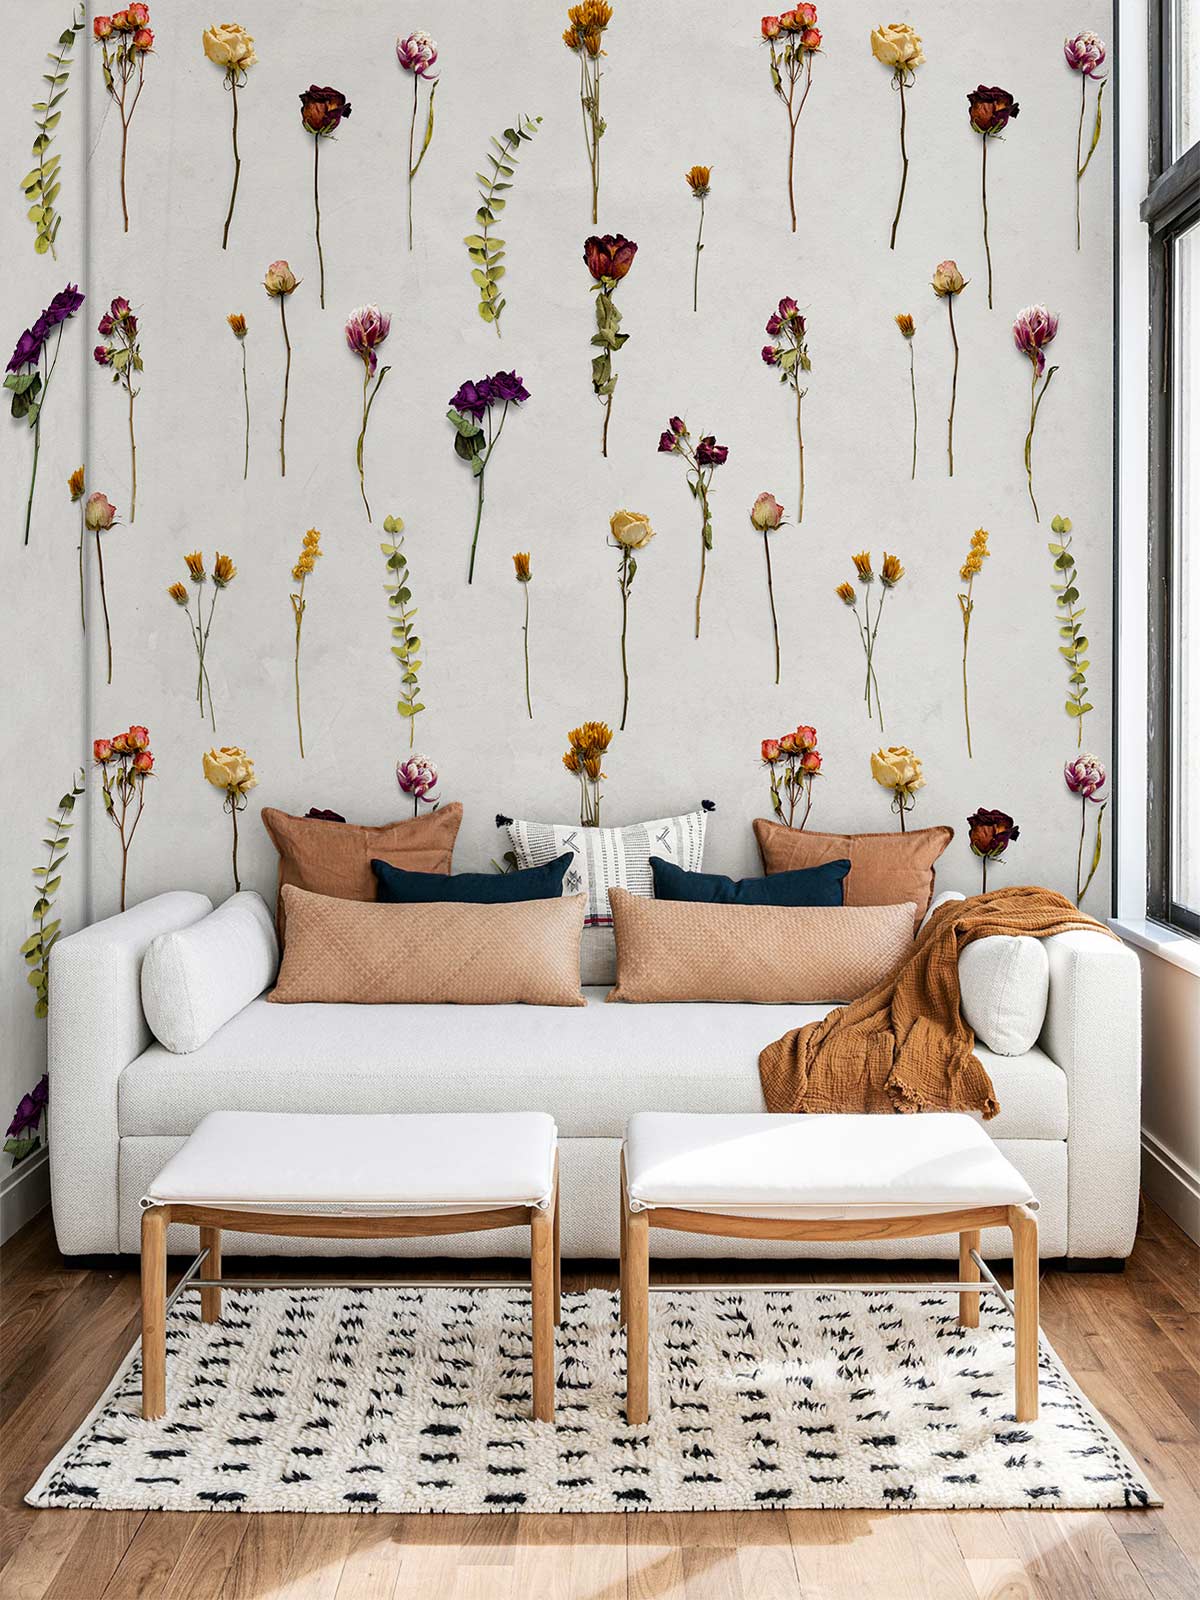 Dride Flowers Wall Mural Home Interior Decor